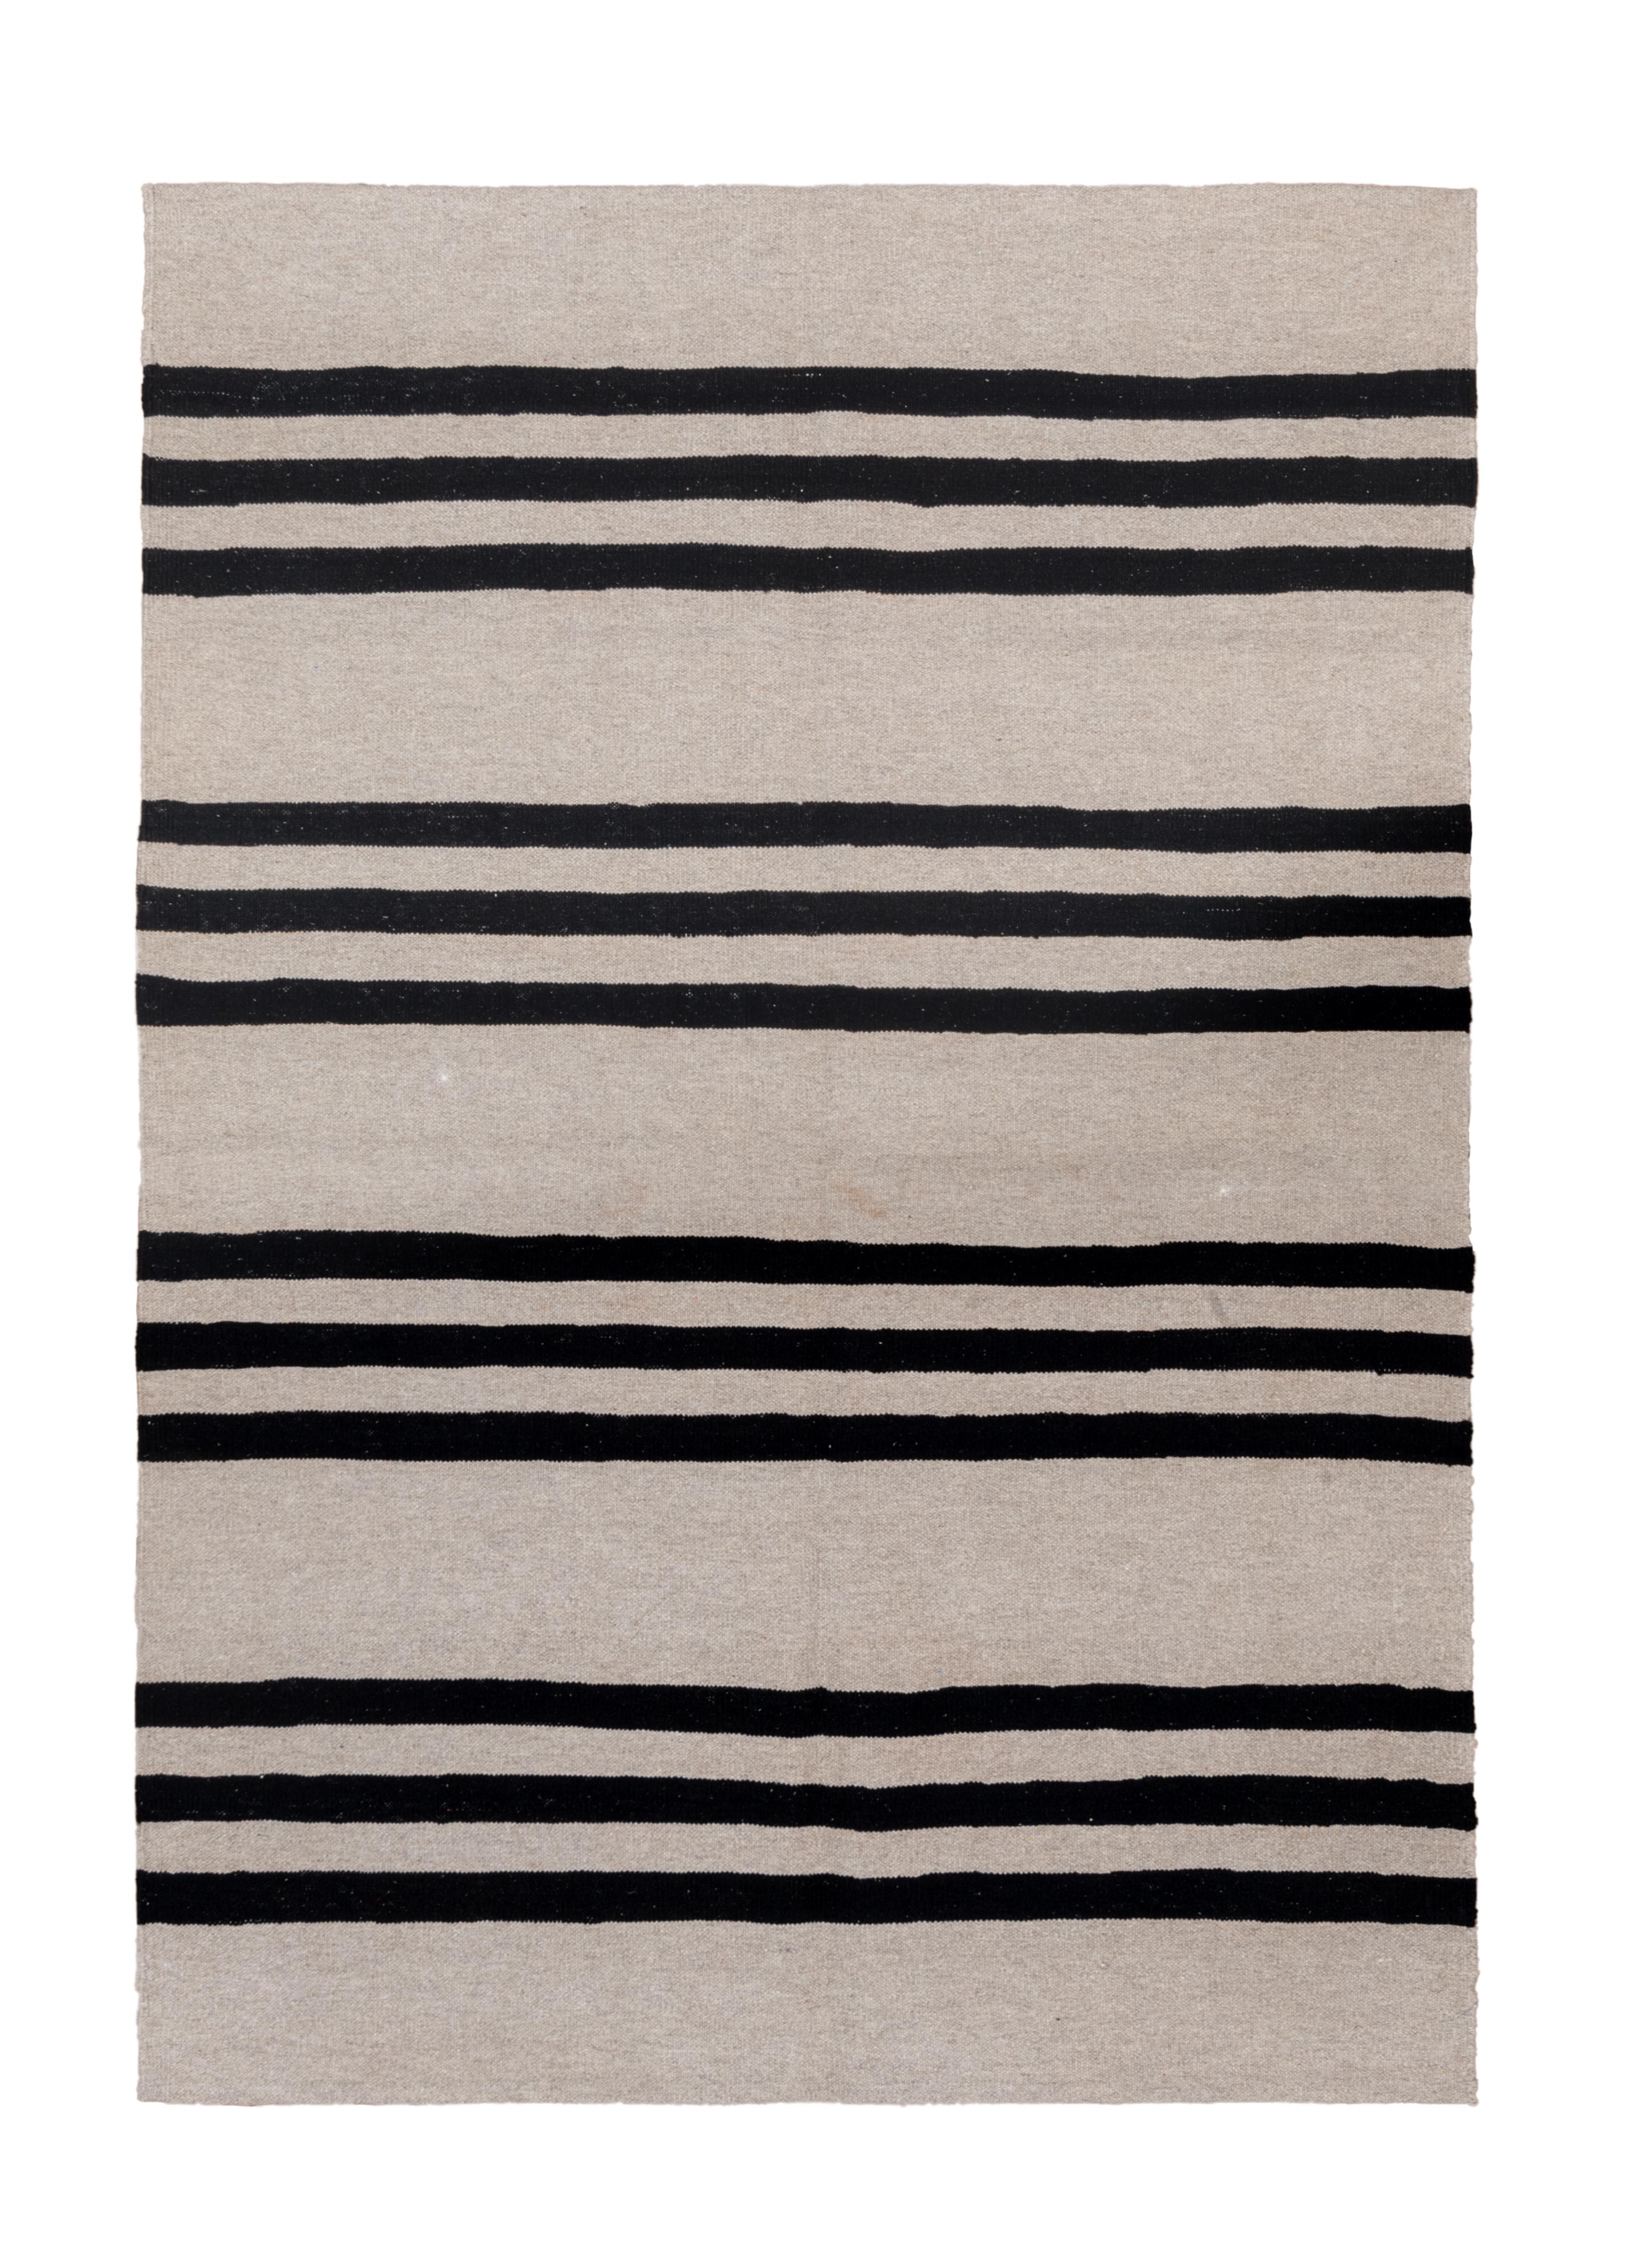 Modern Persian Flatweave
Ivory background and Black stripes
circa 1970s
4'9x6'10.